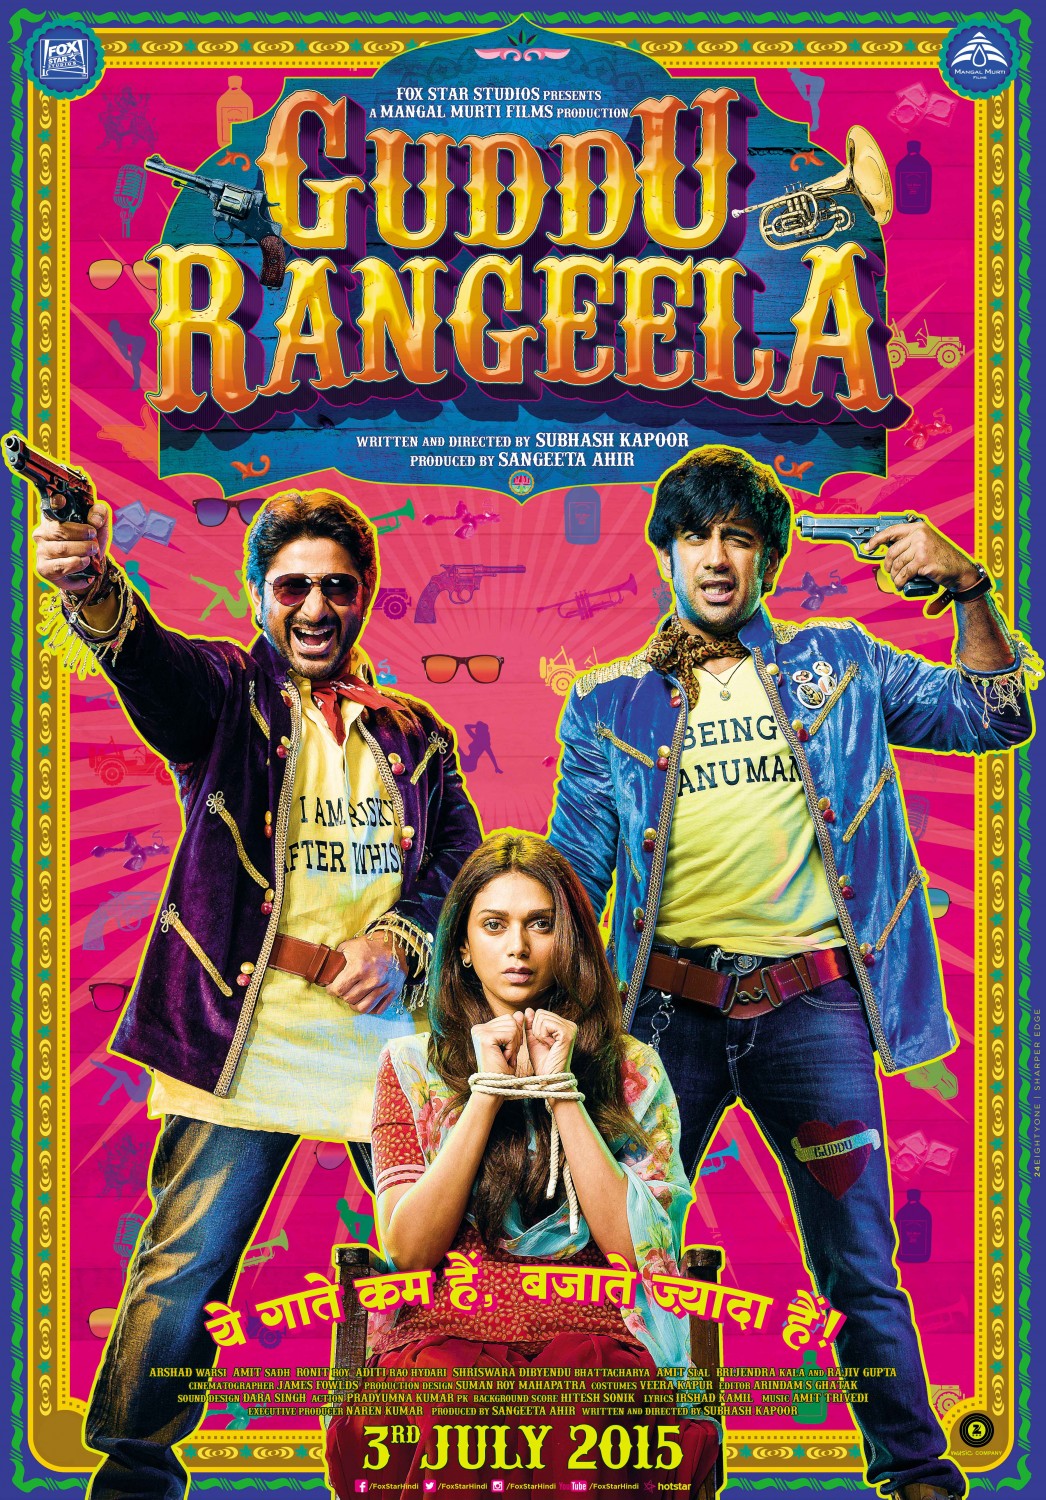 Extra Large Movie Poster Image for Guddu Rangeela 